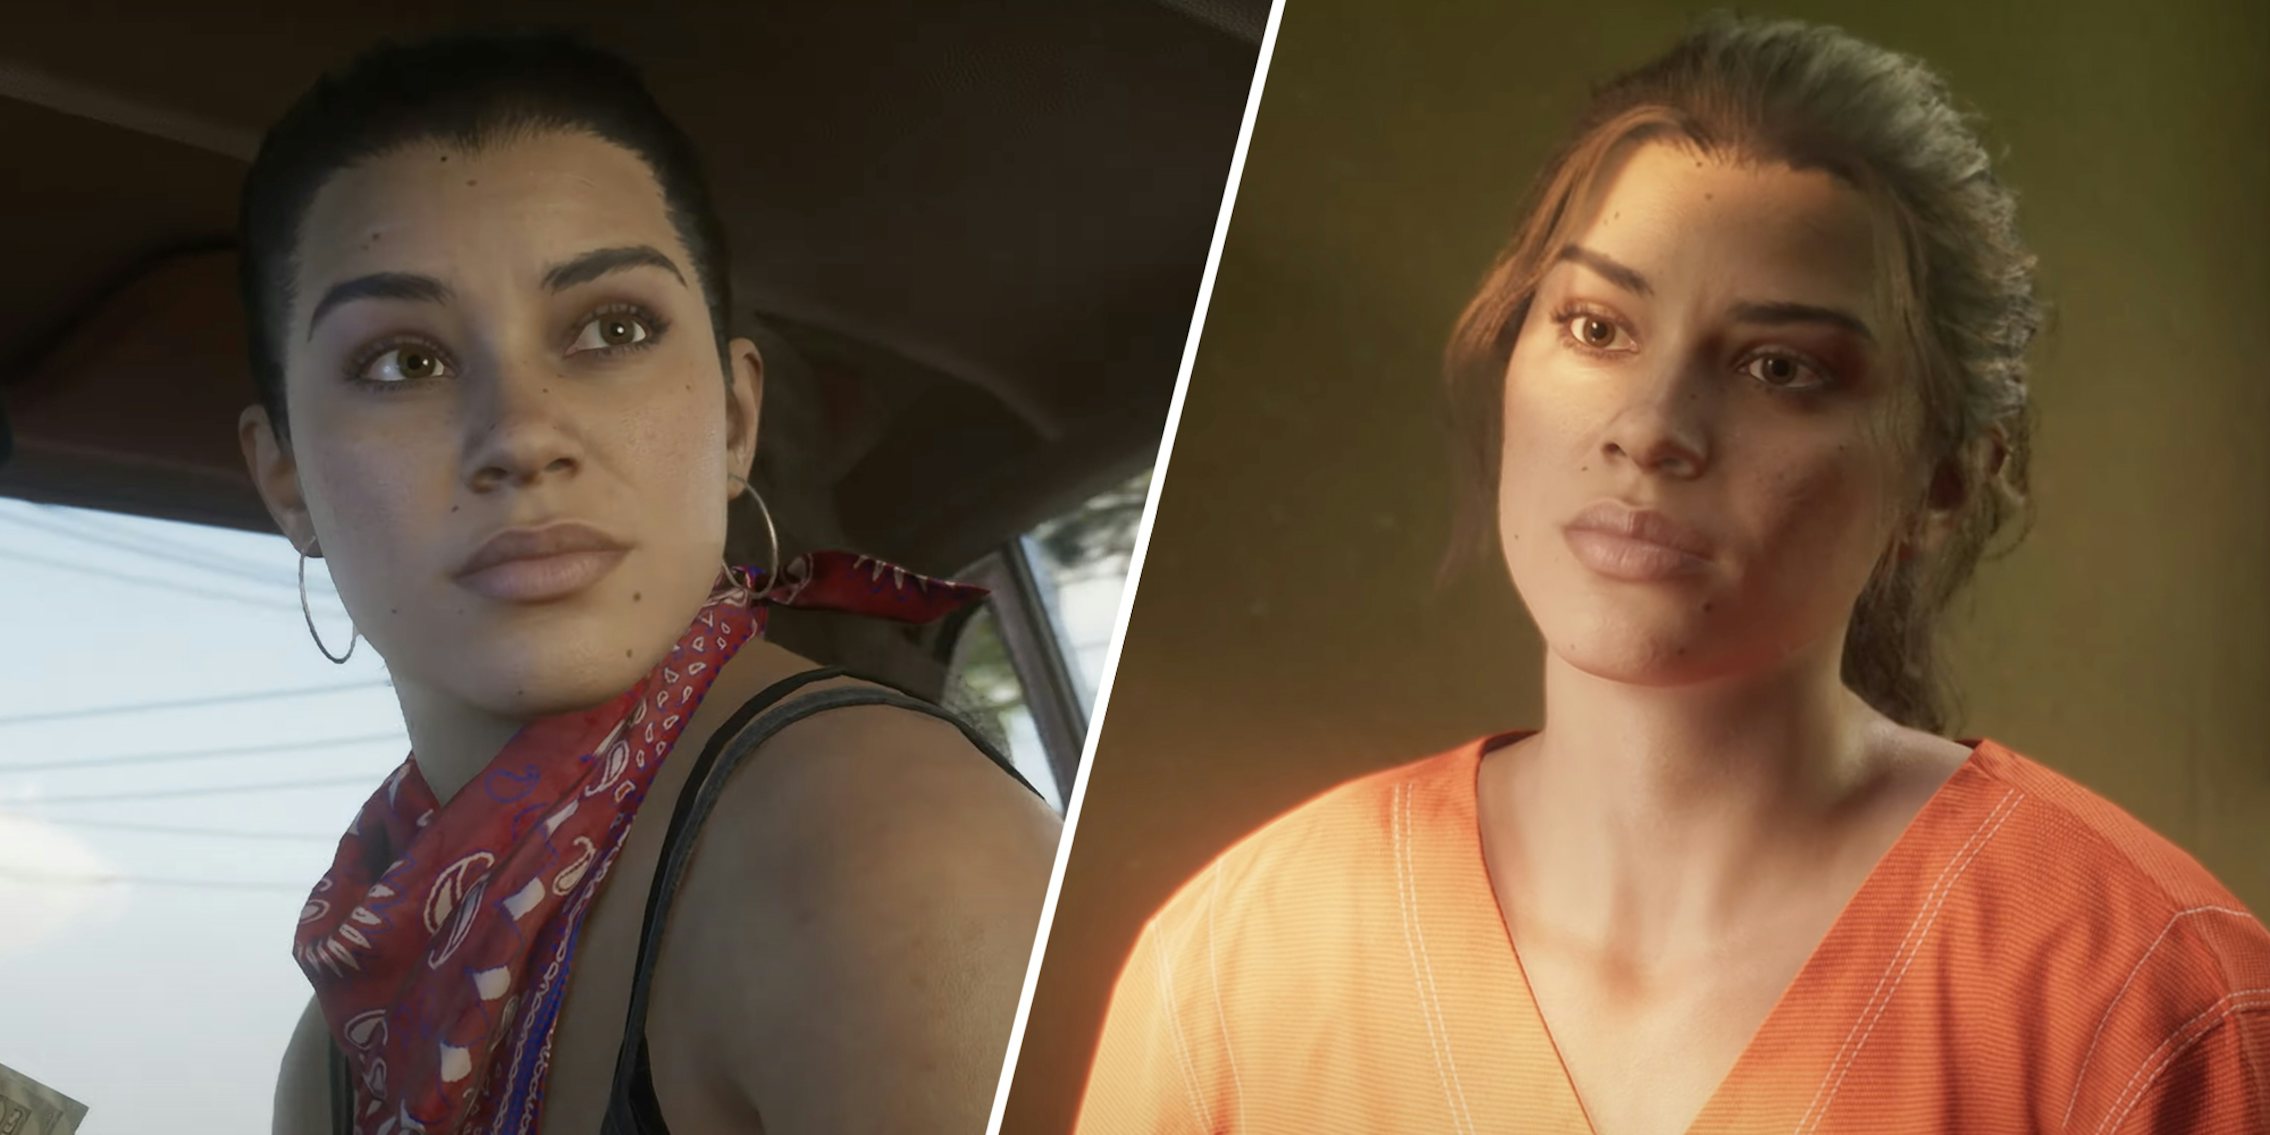 GTA VI' Character Lucia Focus of Transphobic 'Anti-Woke' Theory